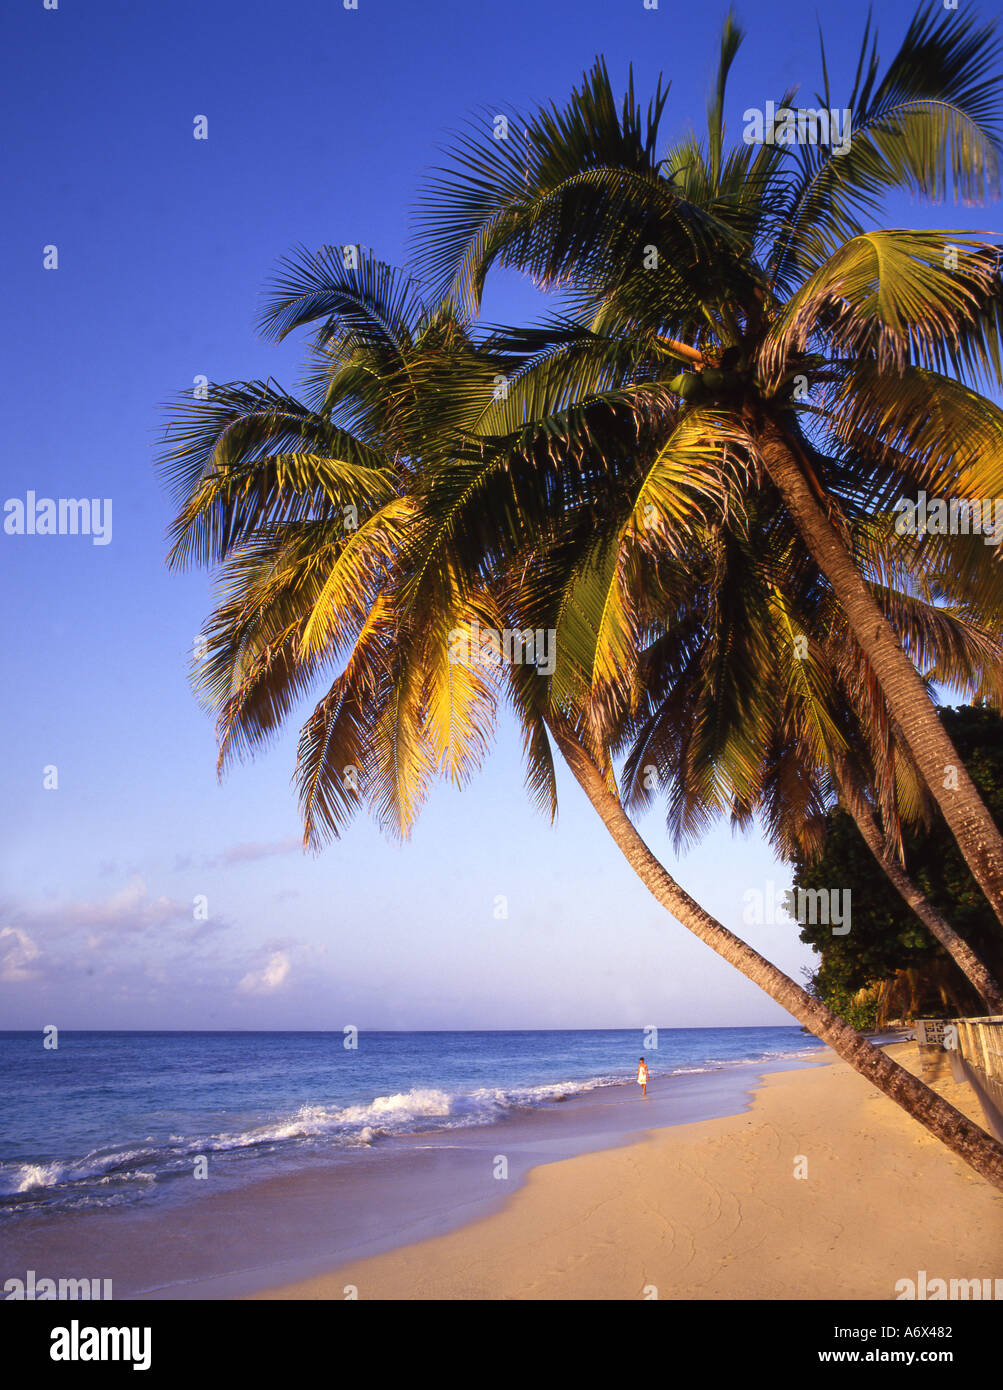 Barbados beach Stock Photo